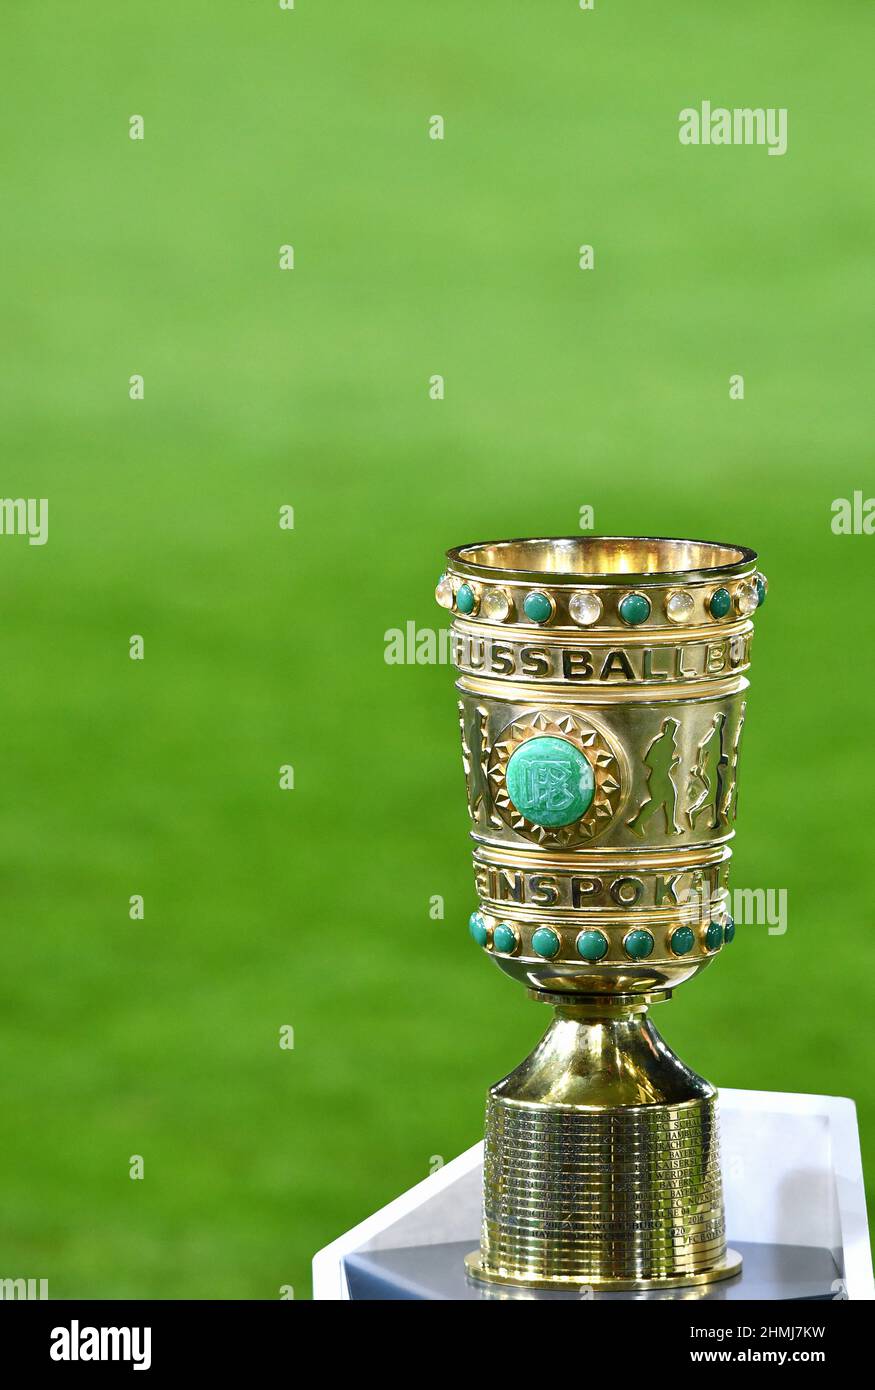 DFB Pokal, Rhein Energie Stadium Colonia: 1. FC Köln vs Hamburger SV; trofeo DFB Cup Foto Stock